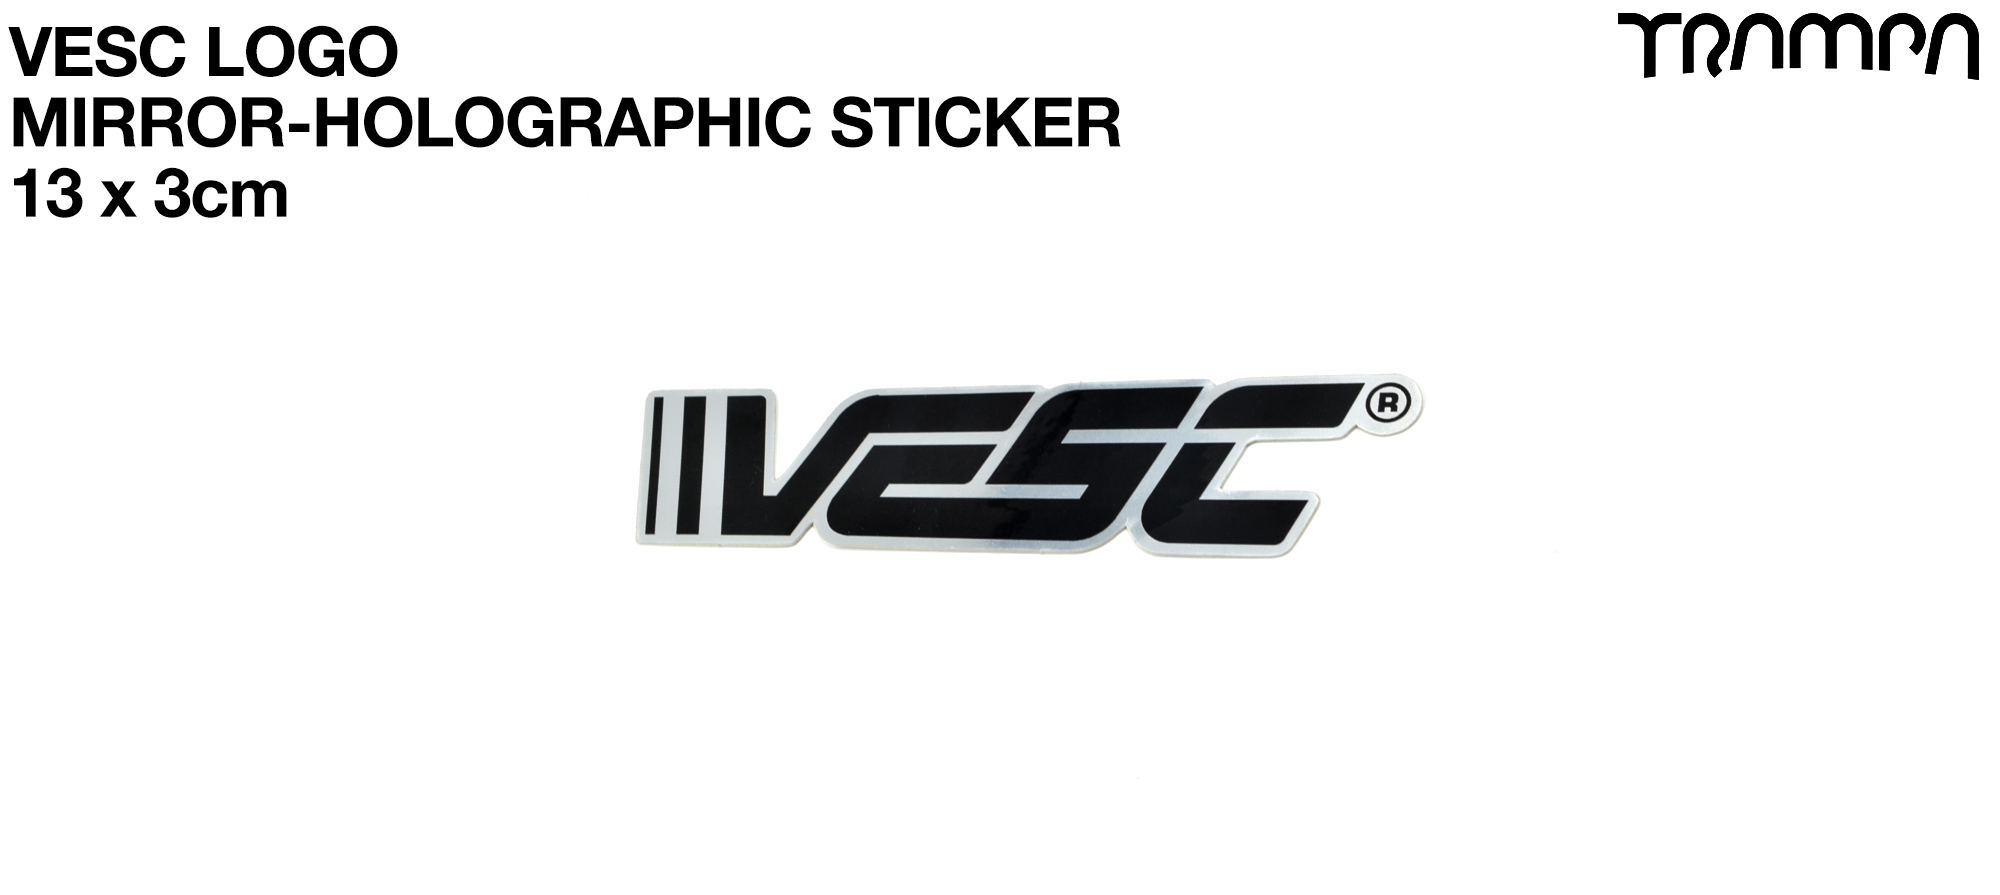 Please give me a V2 Holographic VESC Sticker 